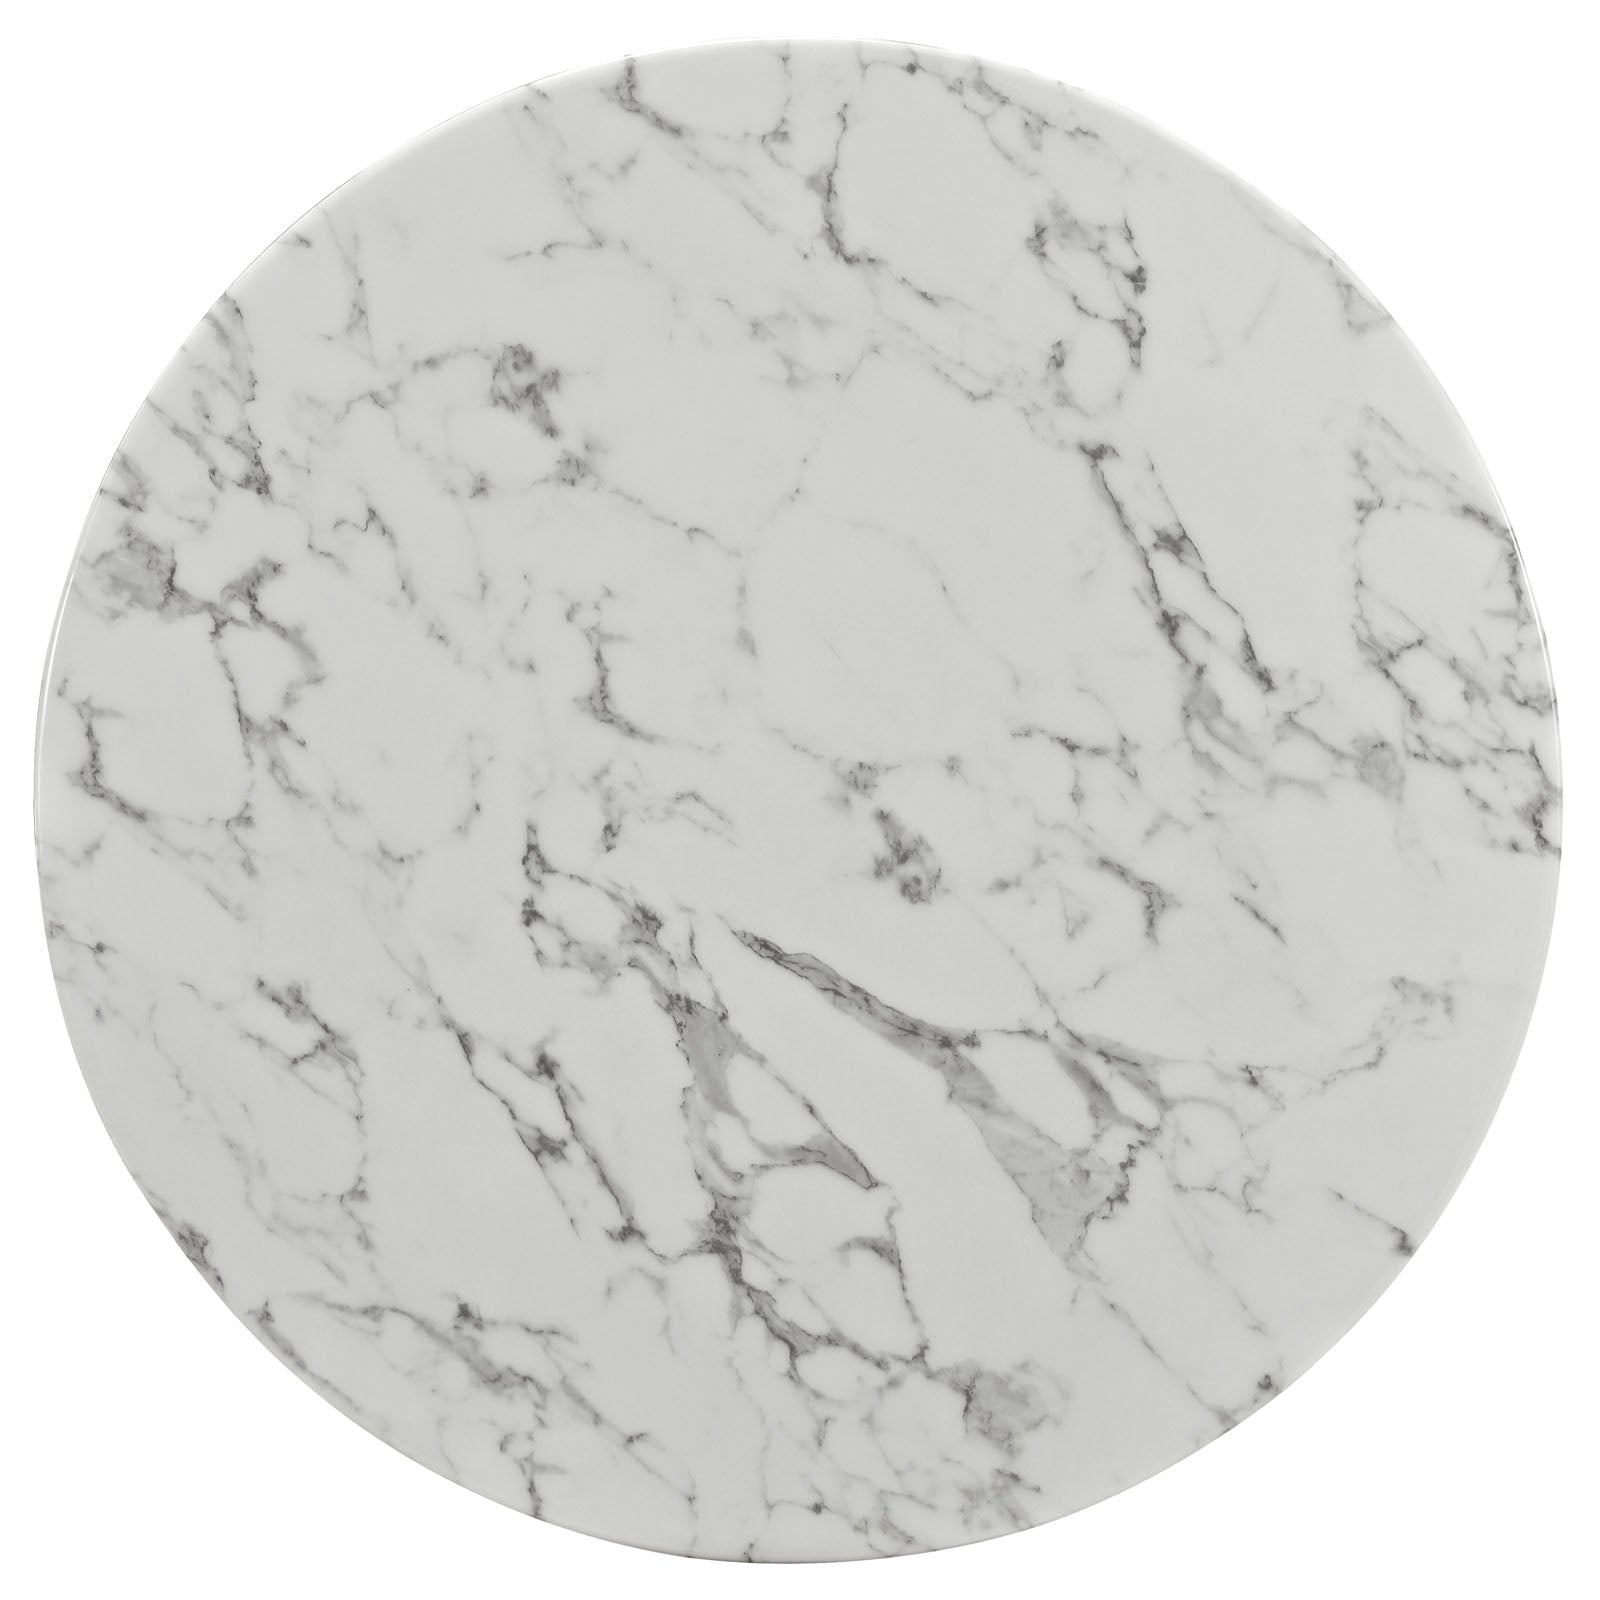 Eero Saarinen Round Tulip Dining Table – Carrara Marble